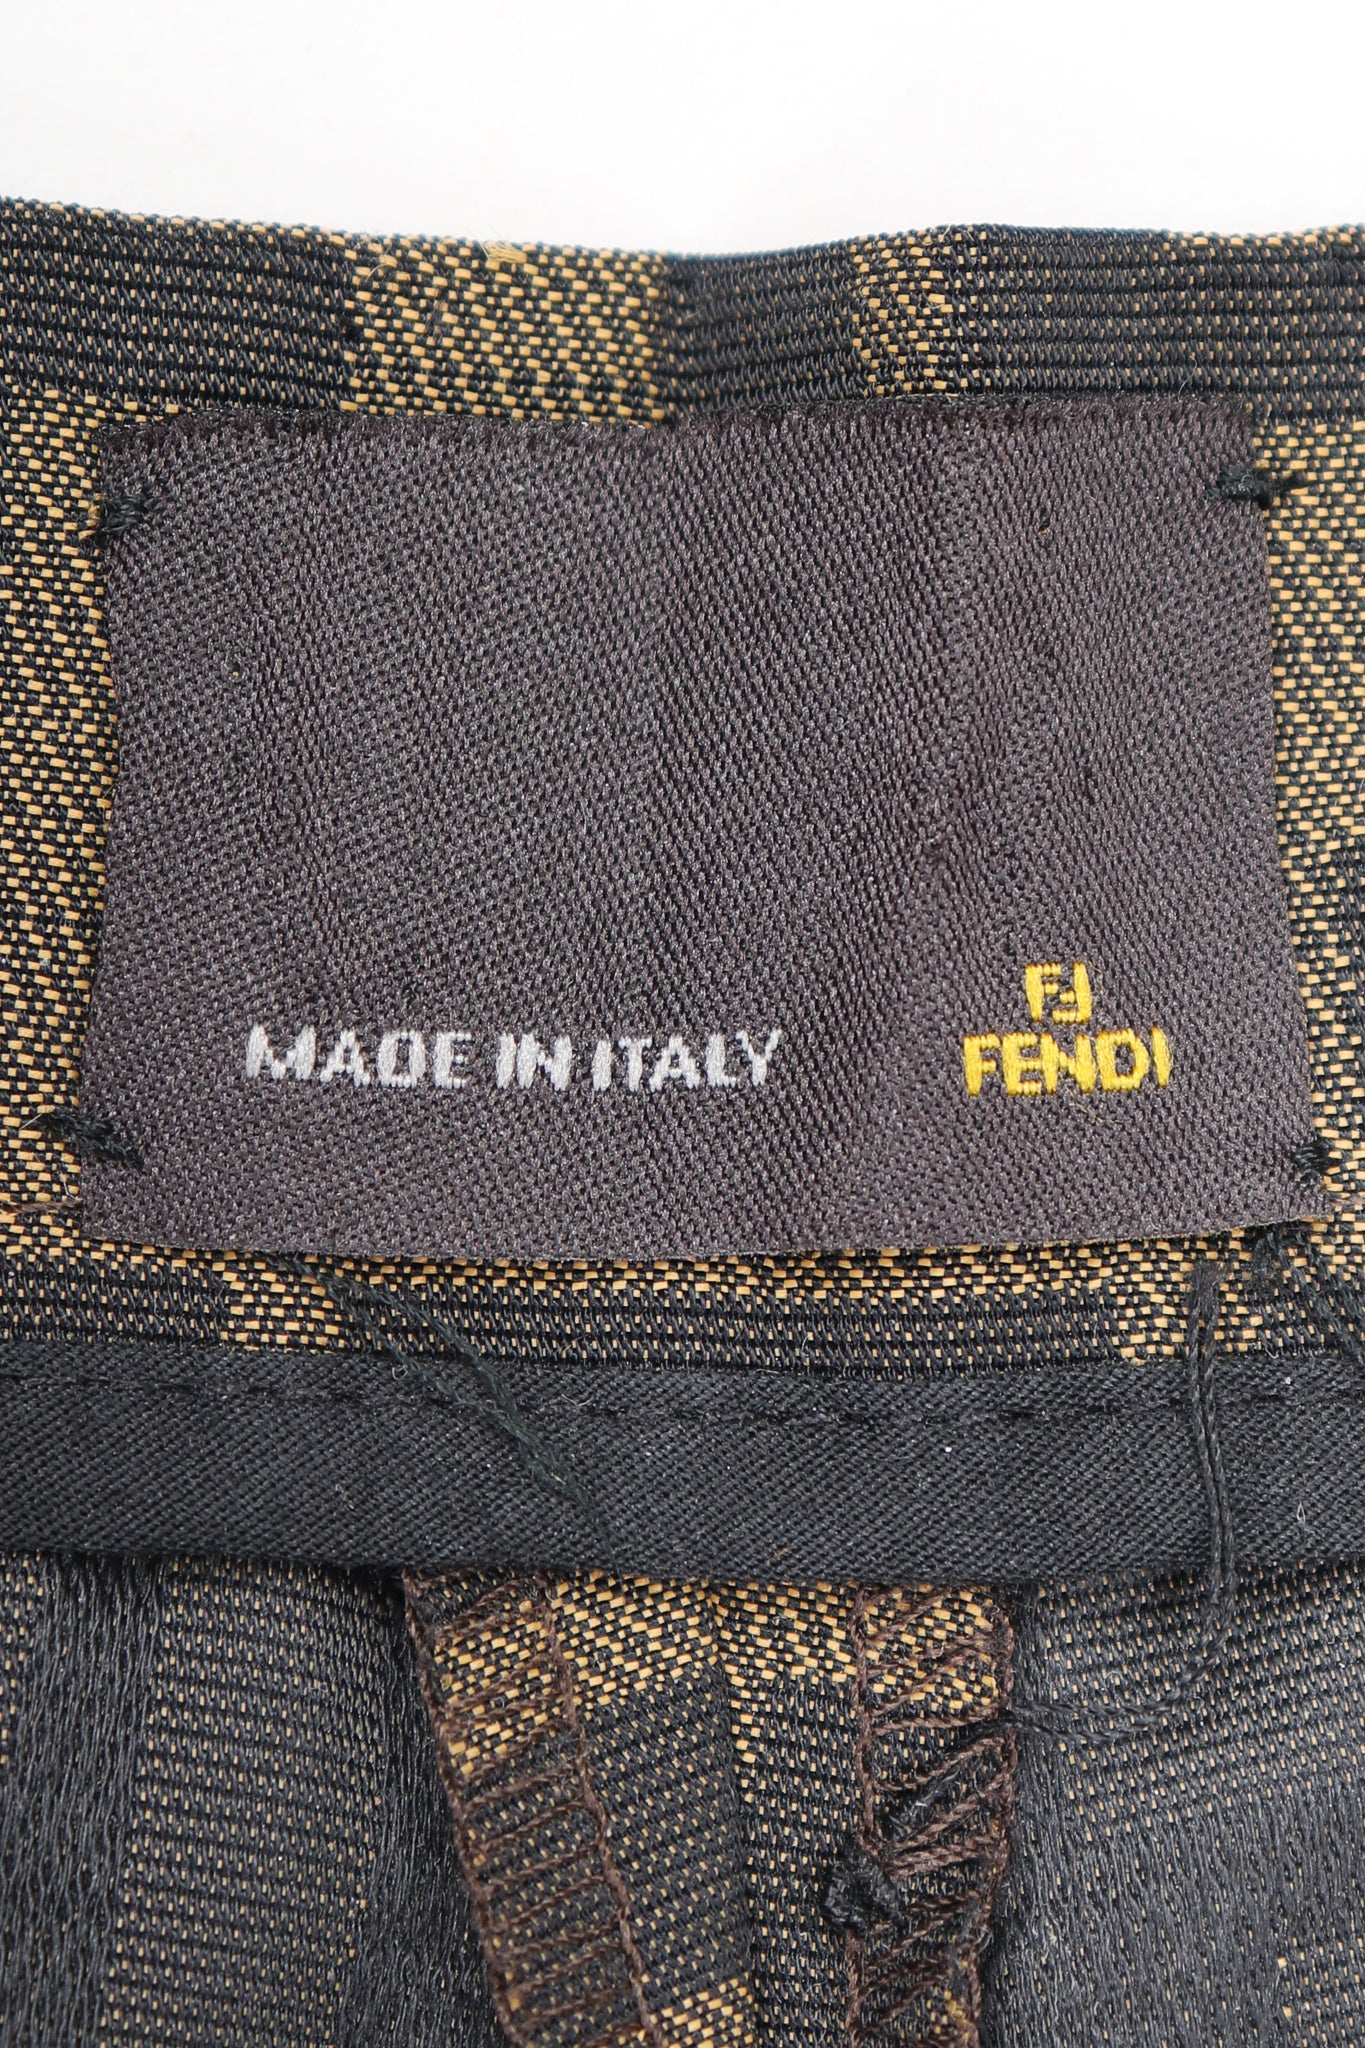 Recess Vintage Fendi Label on Brown Monogram Zucca Pant